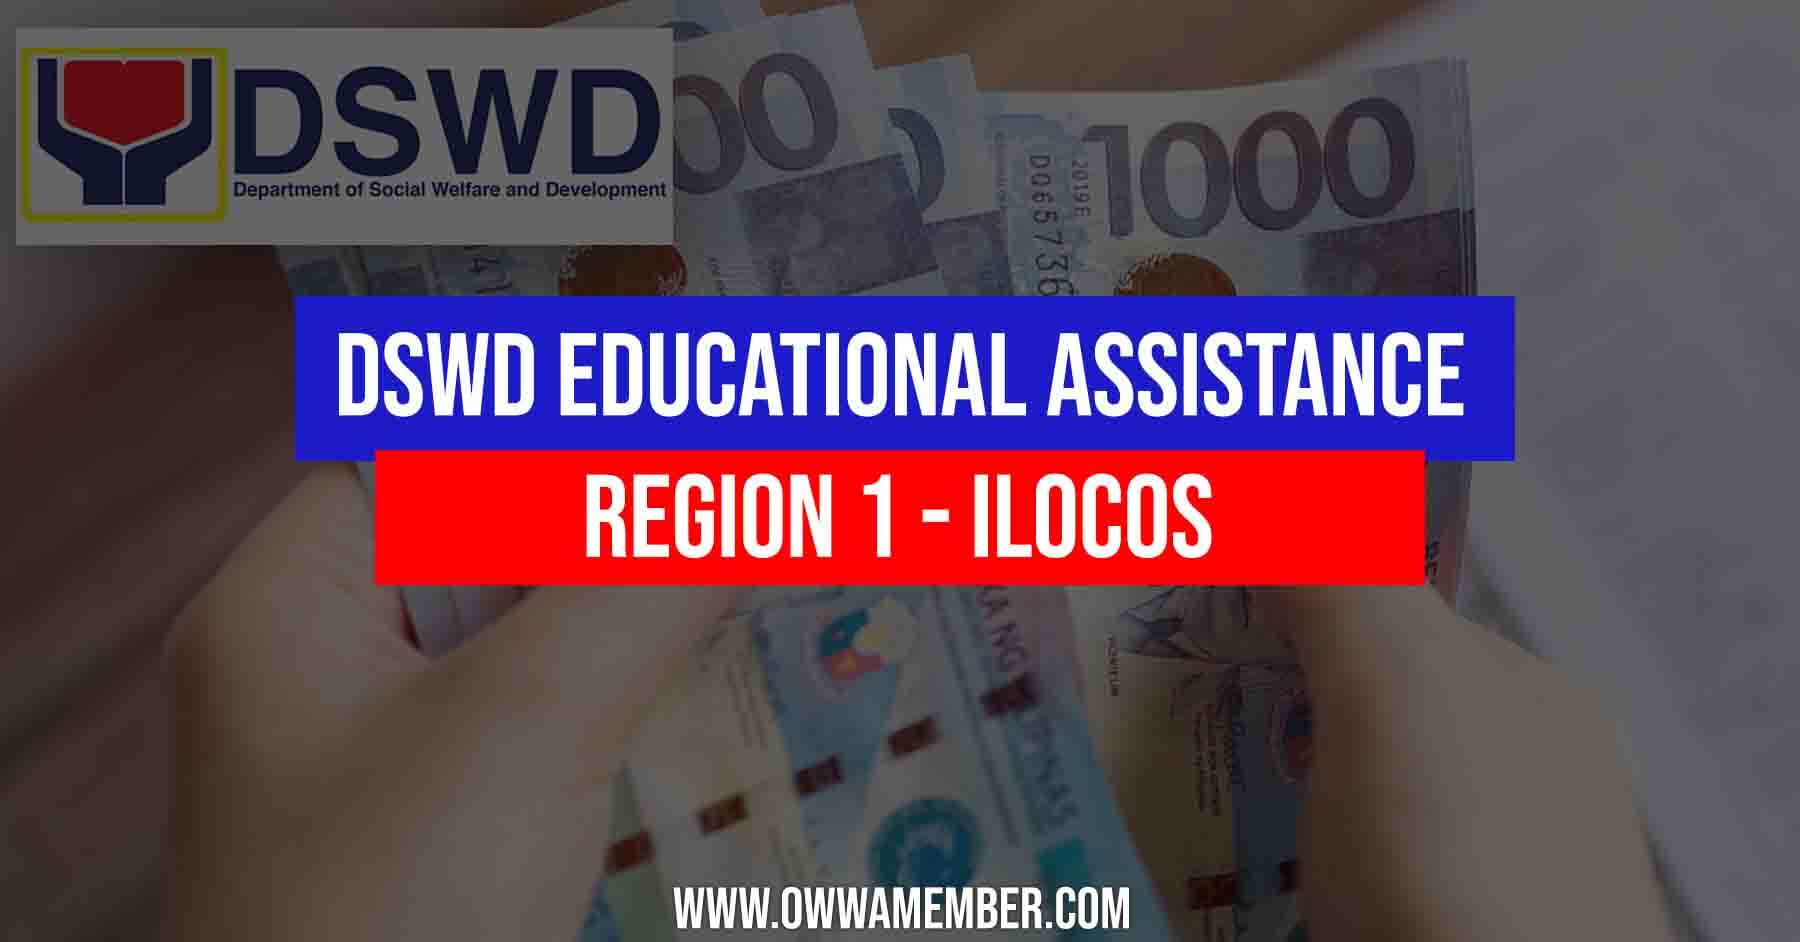 dswd region 1 ilocos educational assistance